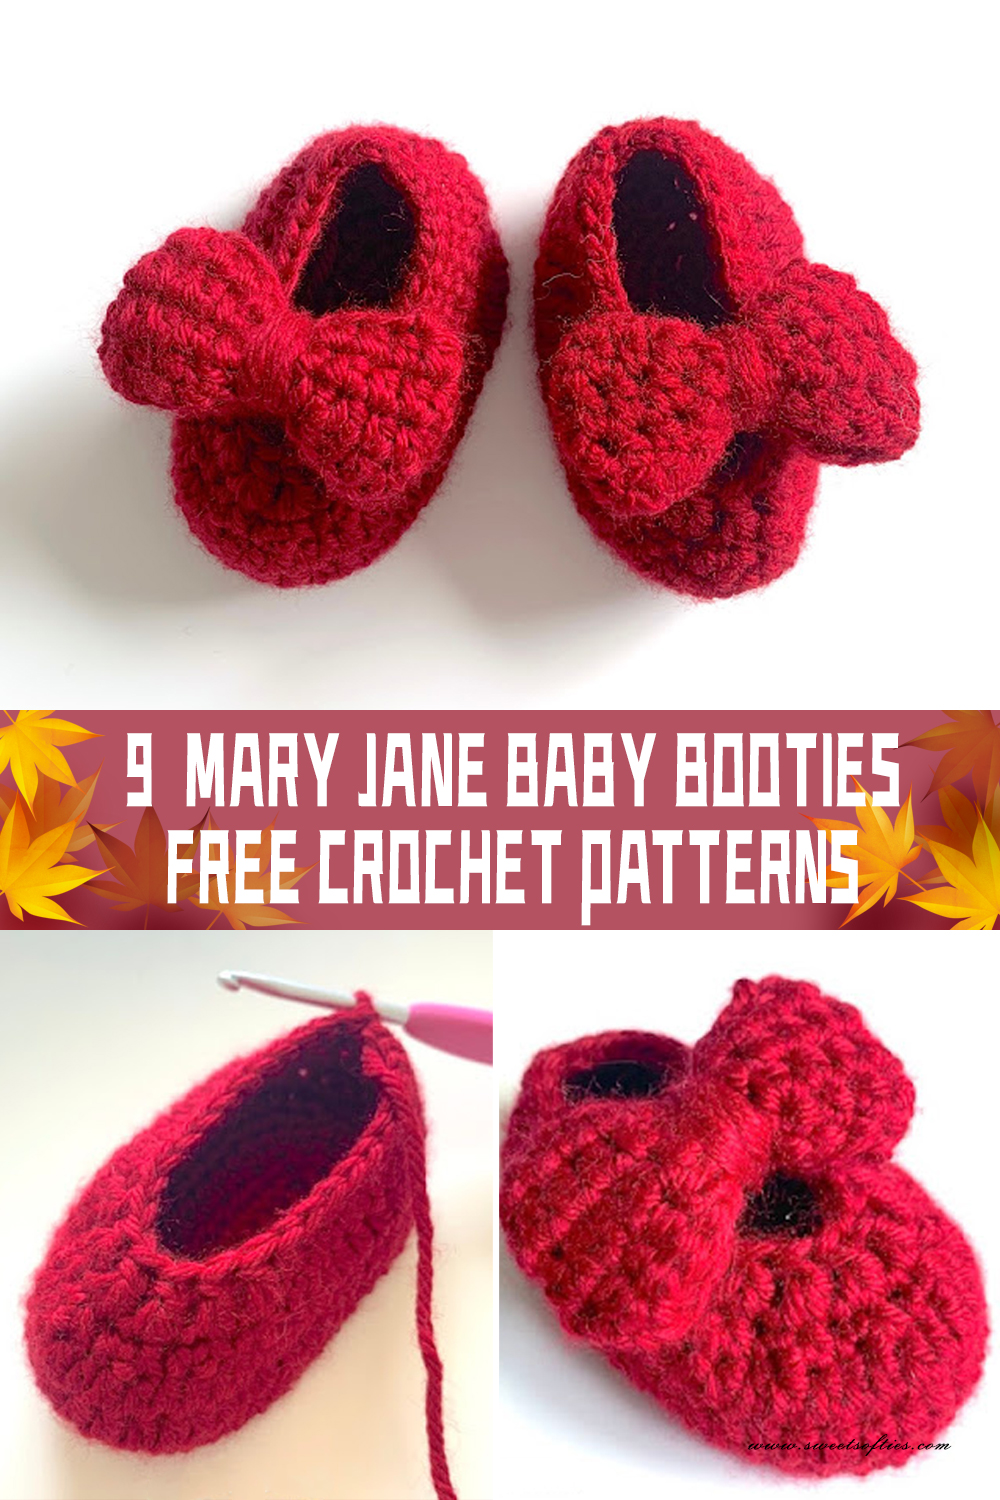 9 Mary Jane Baby Booties Crochet Patterns - FREE - iGOODideas.com